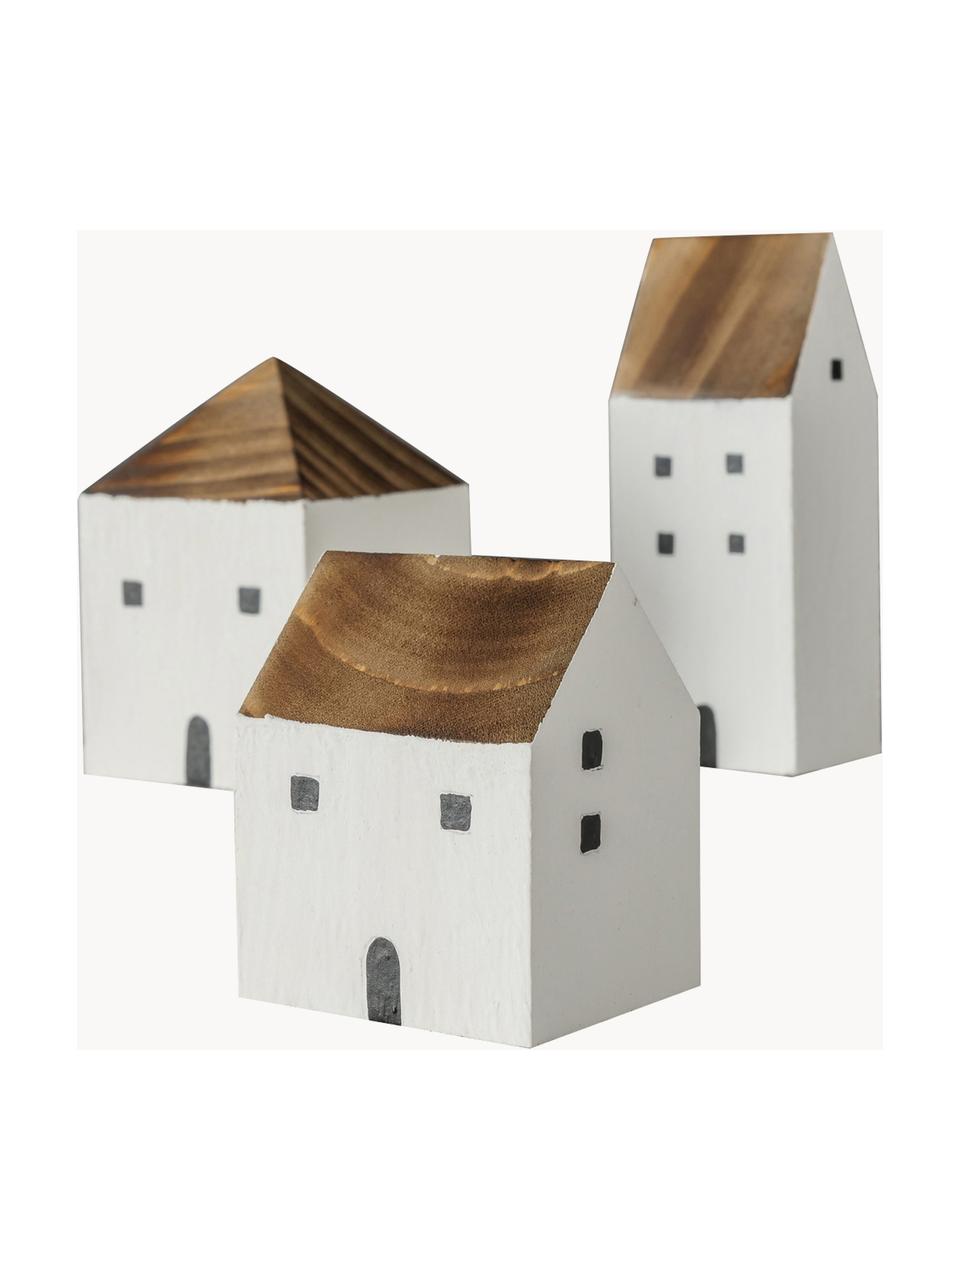 Figuras decorativas casas de madera de pino Gotan, 3 uds., Madera de pino, Madera oscura, blanco, Set de diferentes tamaños